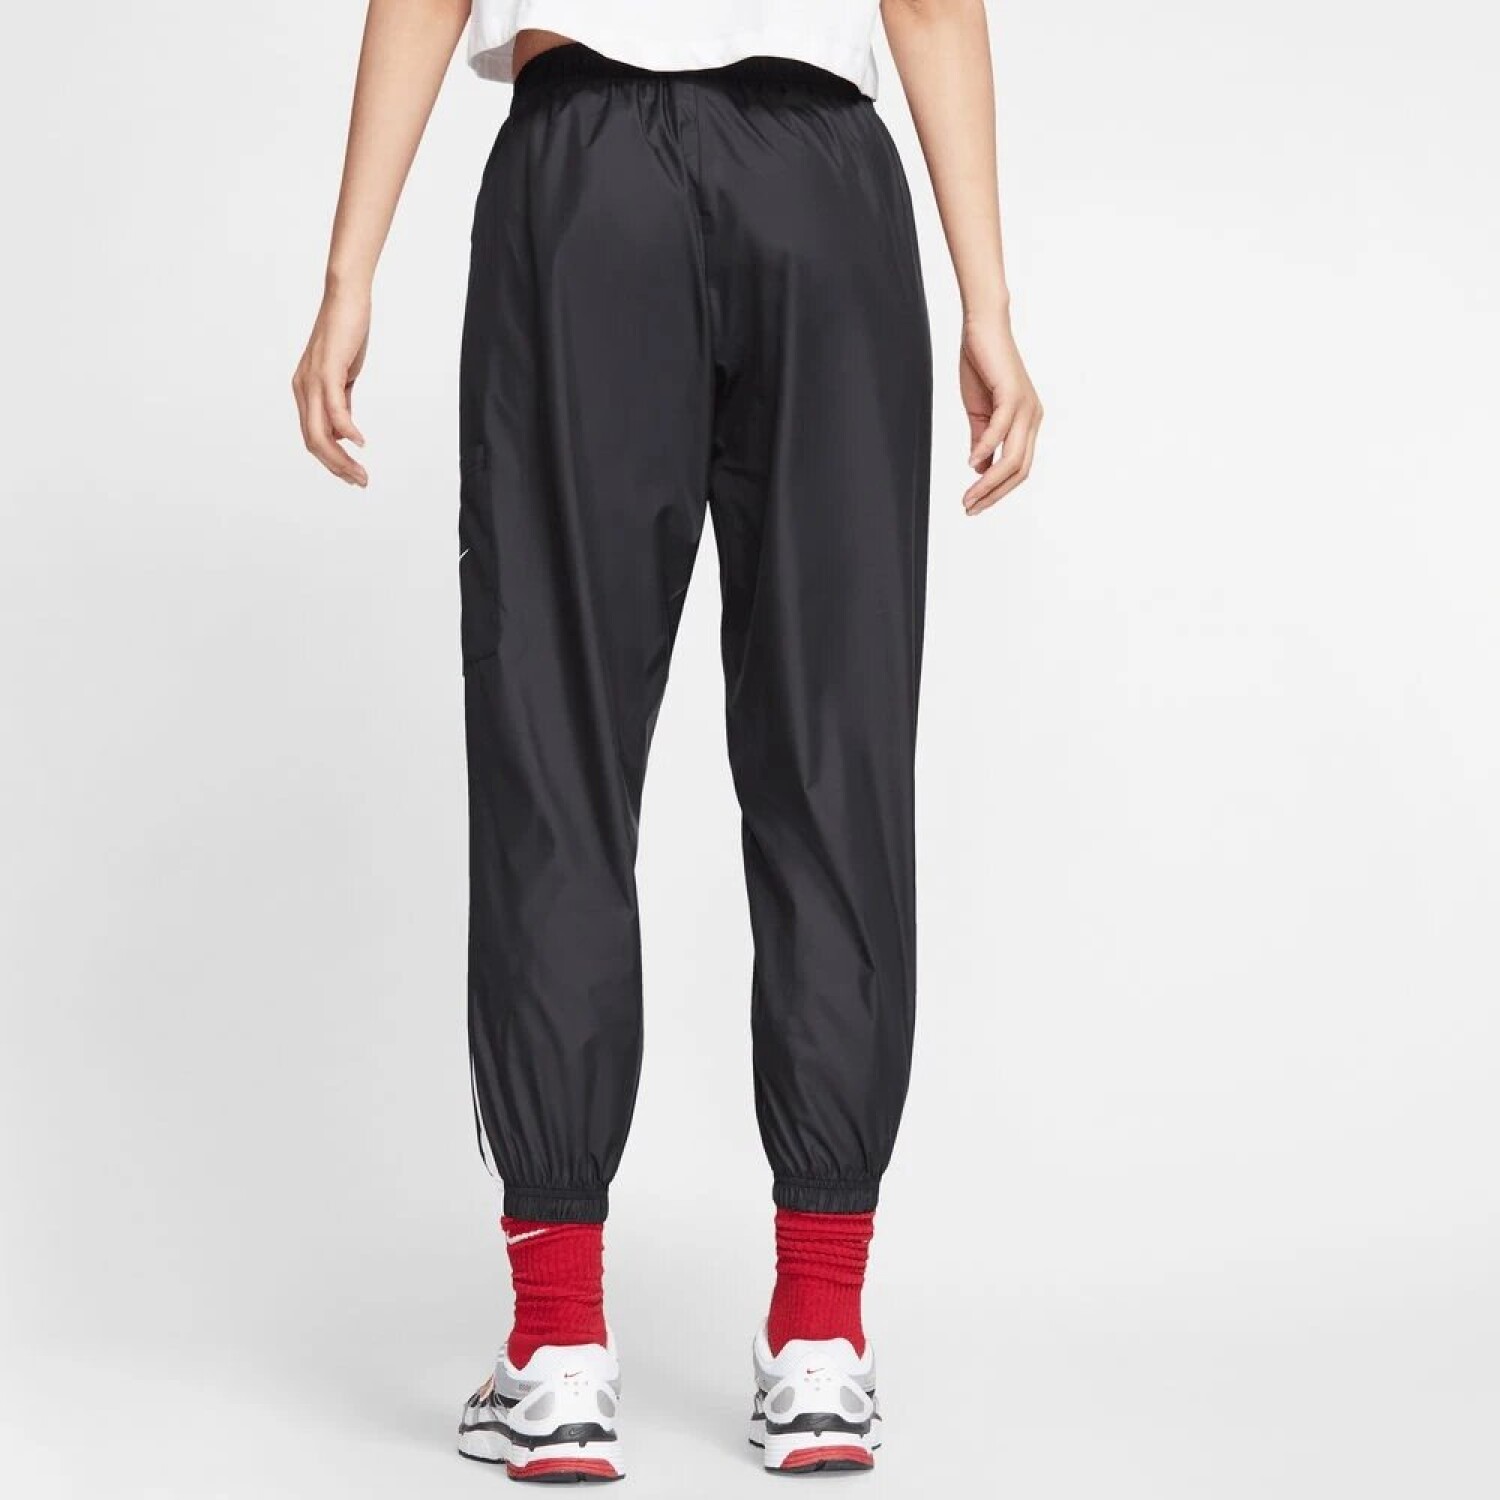 Pantalon Nike Moda Dama Wvn - S/C — Menpi